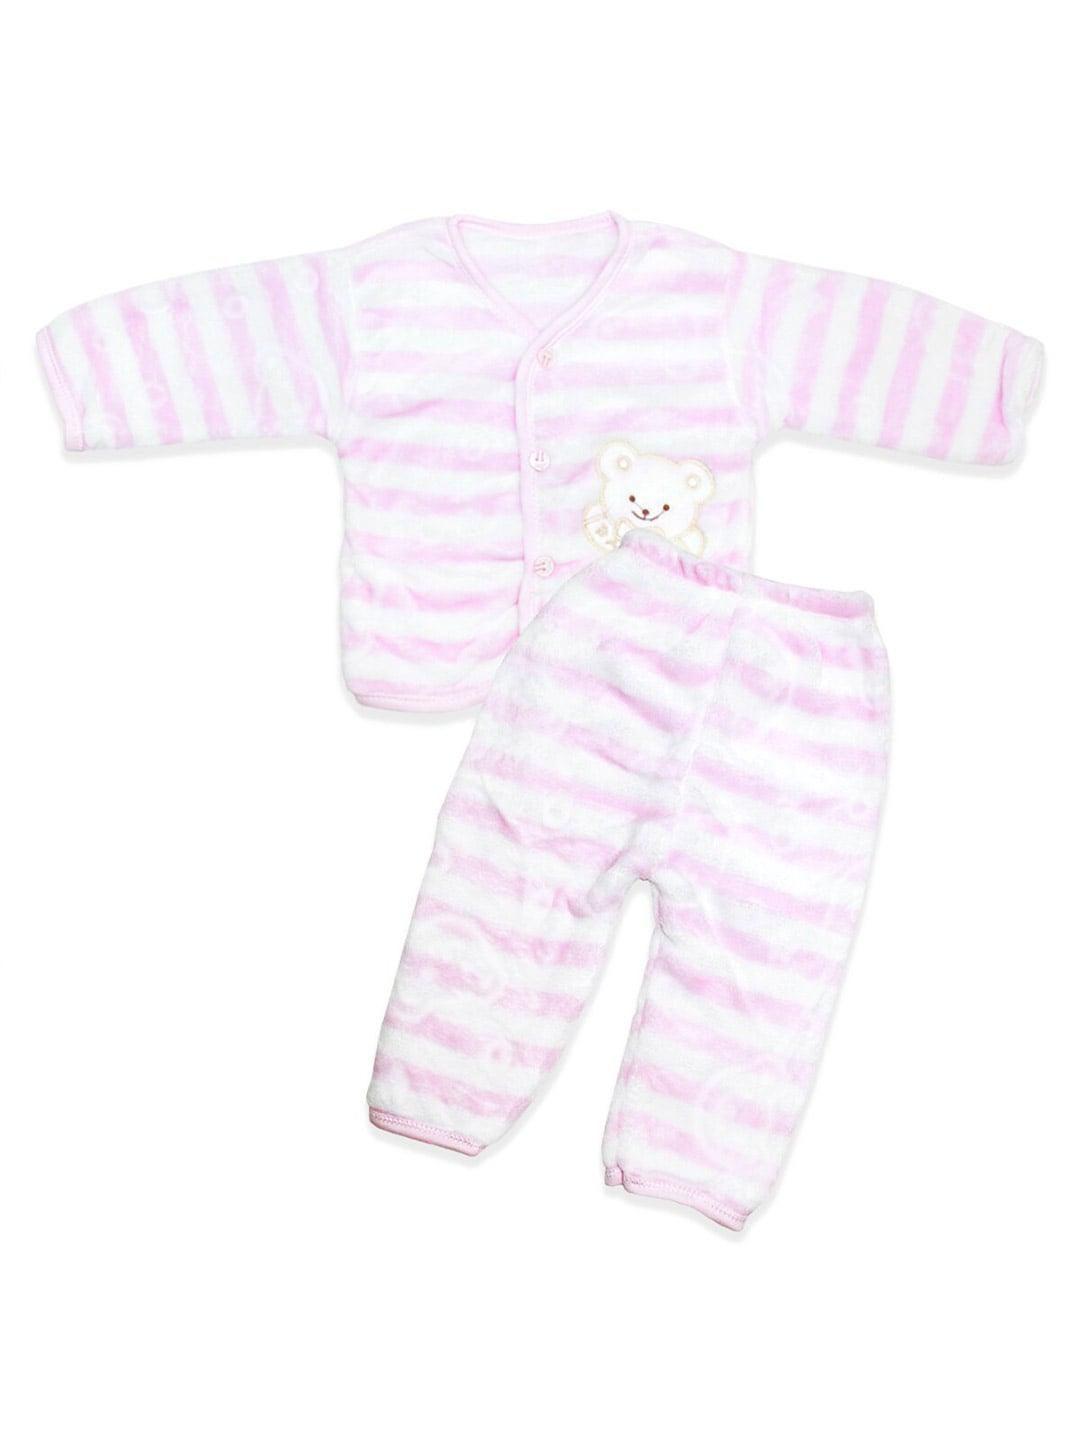 born-babies-unisex-kids-pink-&-white-striped-cardigan